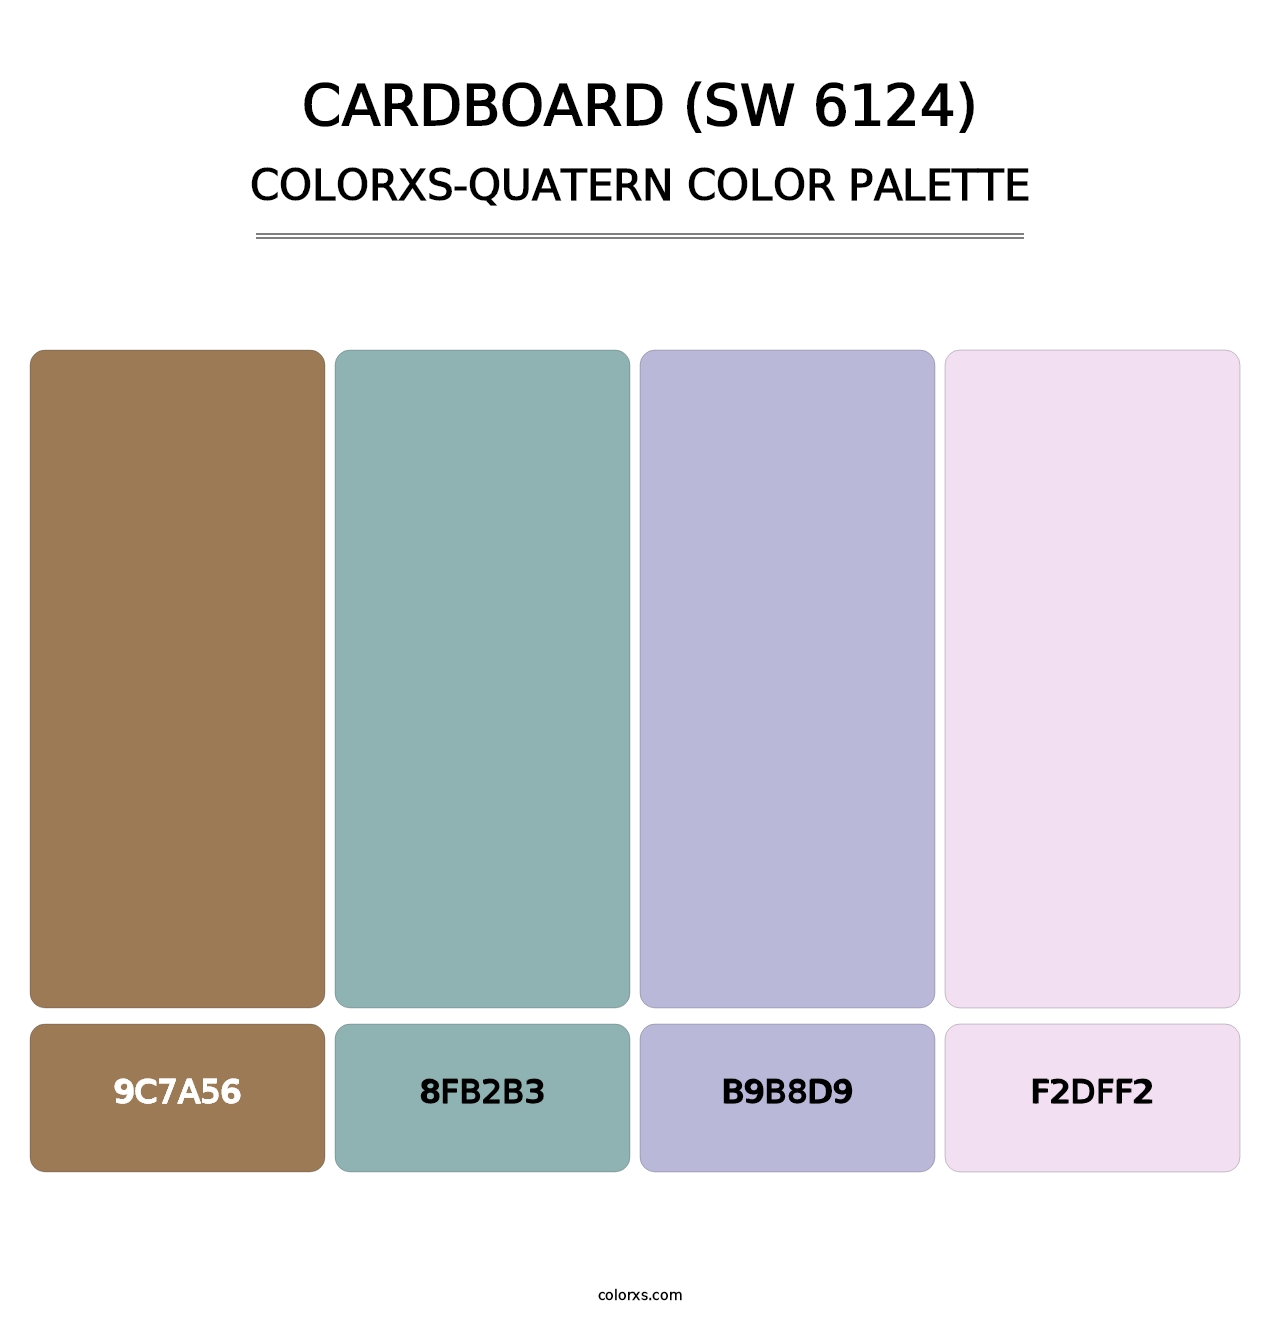 Cardboard (SW 6124) - Colorxs Quatern Palette